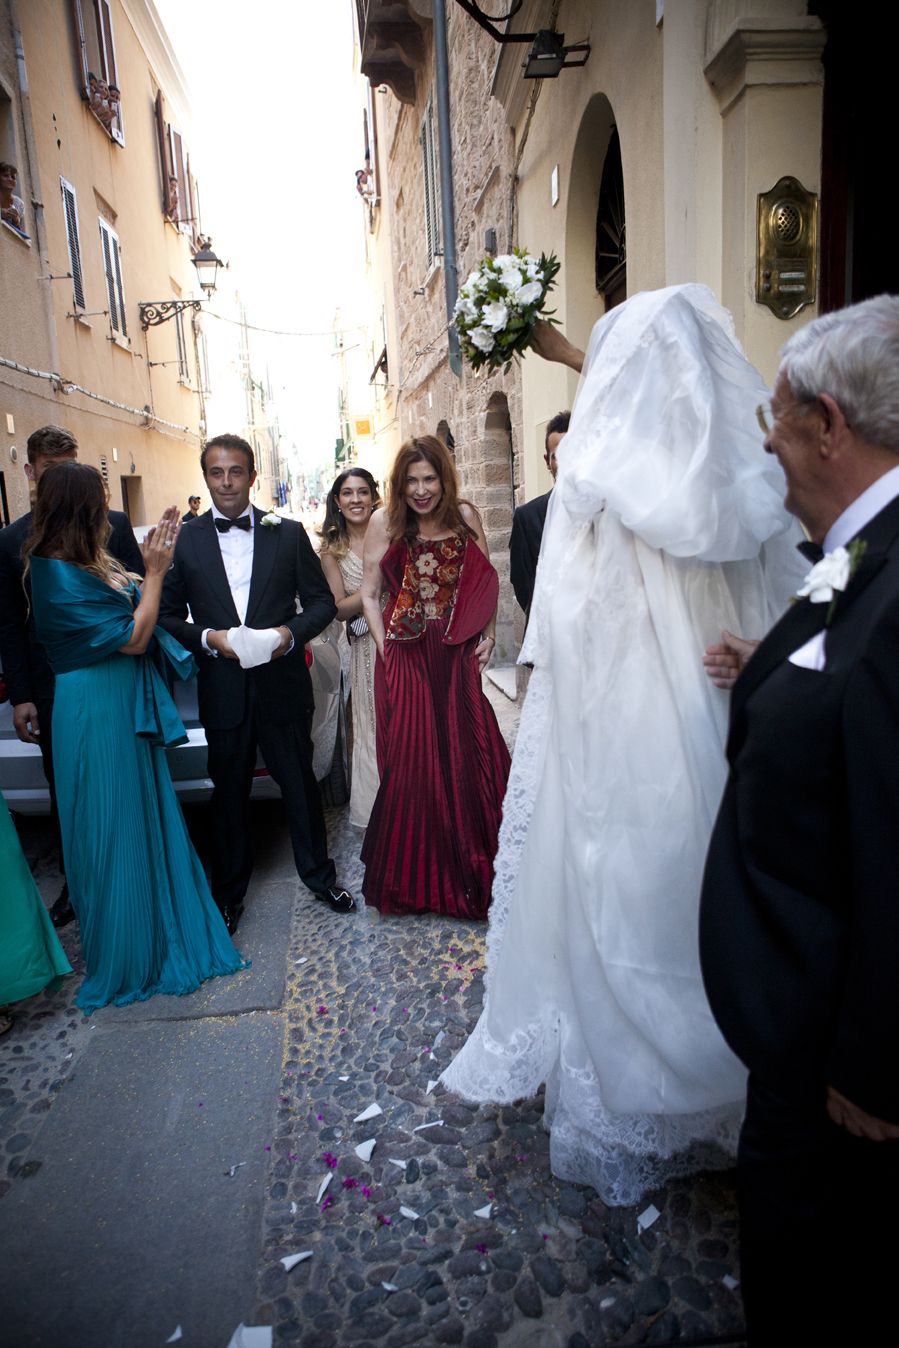 Photograph, Wedding dress, Ceremony, Event, Tradition, Bride, Dress, Veil, Gown, Wedding, 